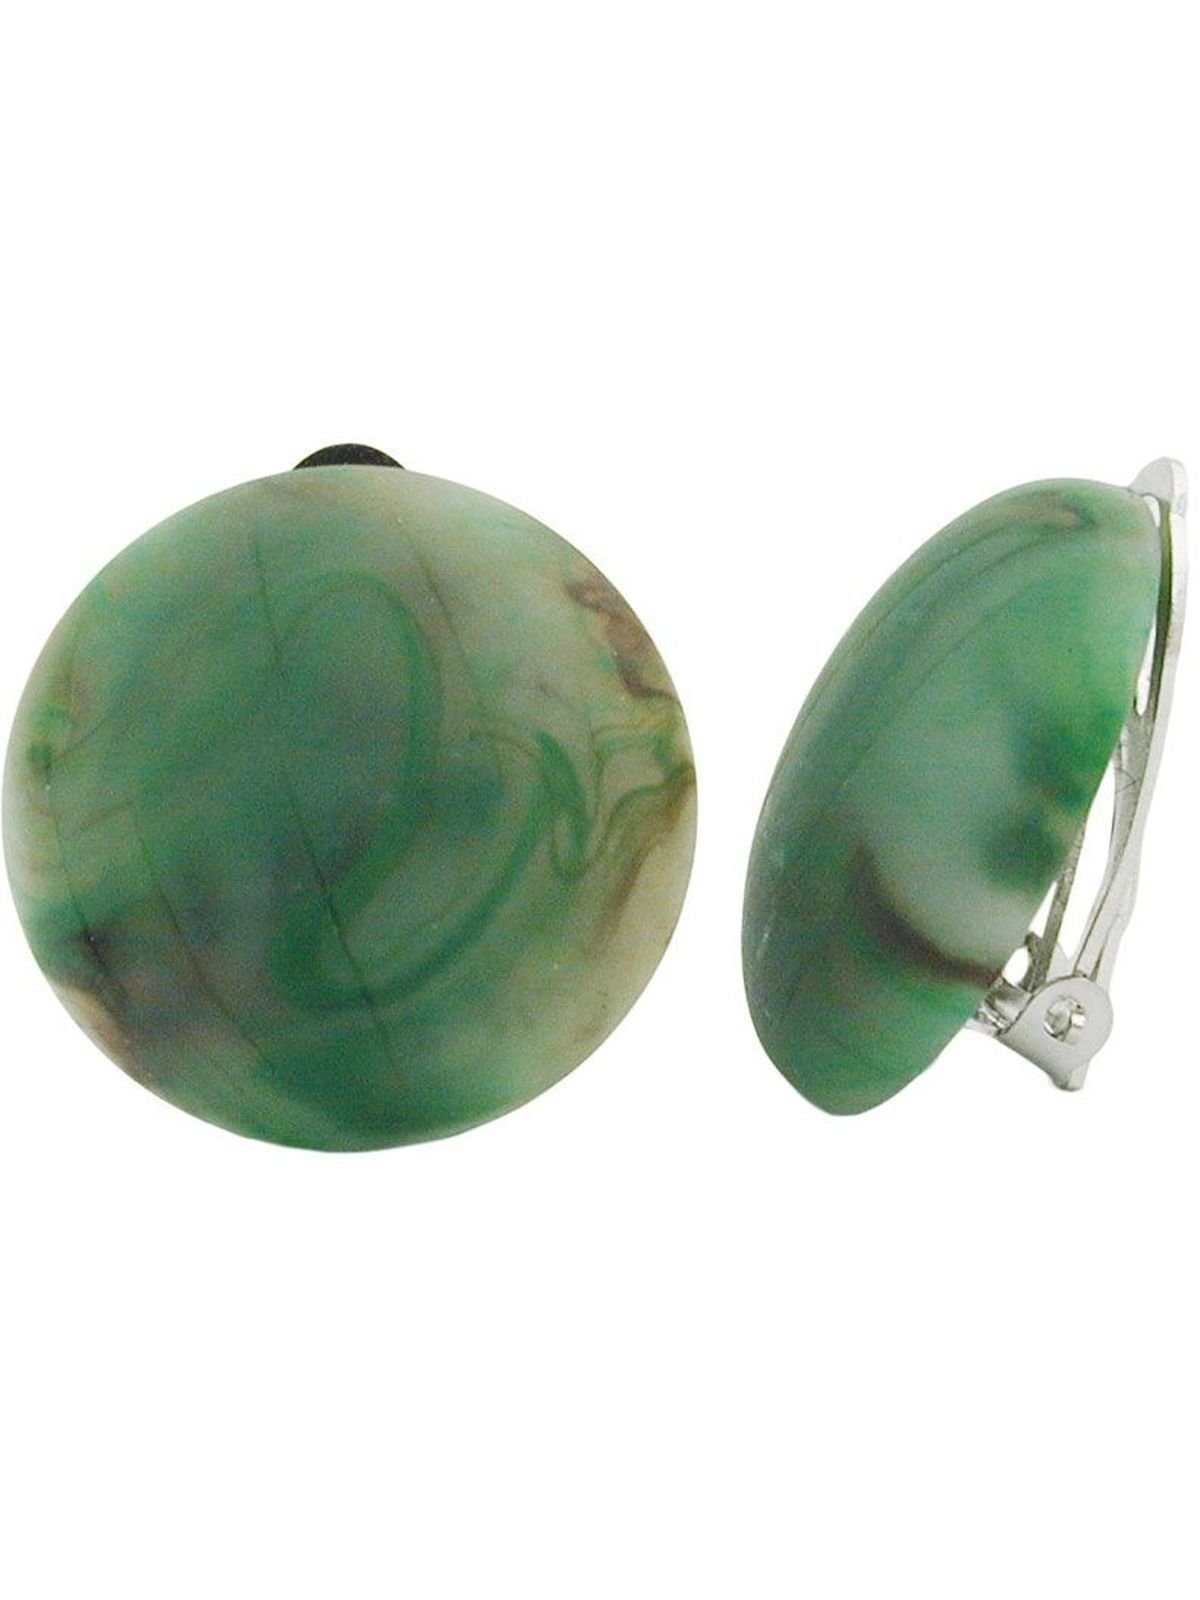 Neue Artikel zum Kauf Gallay Paar Ohrclips Ohrring grün-braun-marmoriert matt (1-tlg) Kunststoff-Bouton 22mm Riss